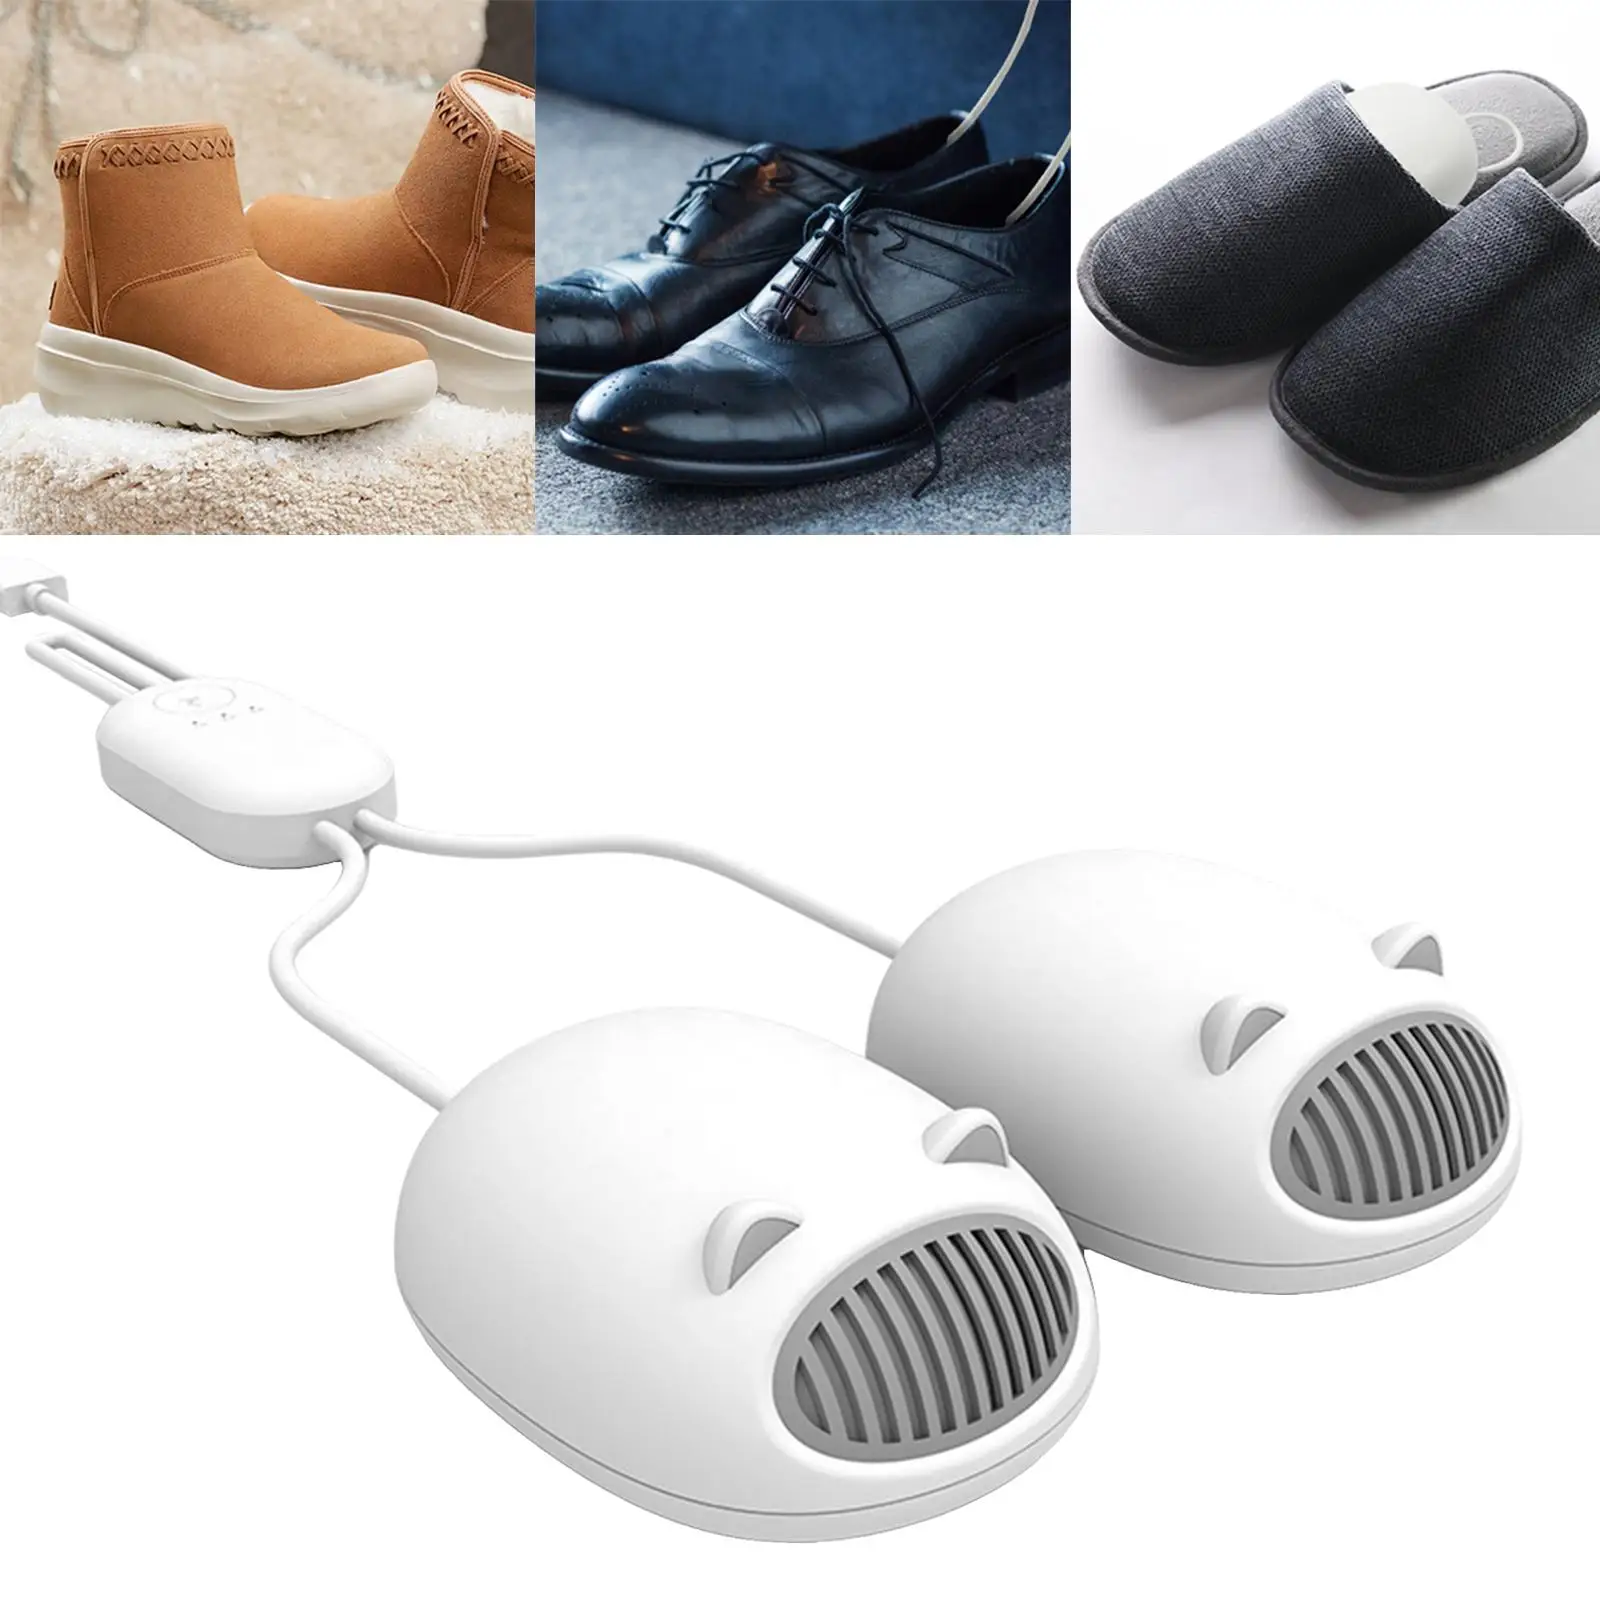 Portable Boot Shoe Dryer Fast Dryer Eliminate Bad Odor Household No Noise Length Adjustable Mini Socks Shoes Gloves Hats